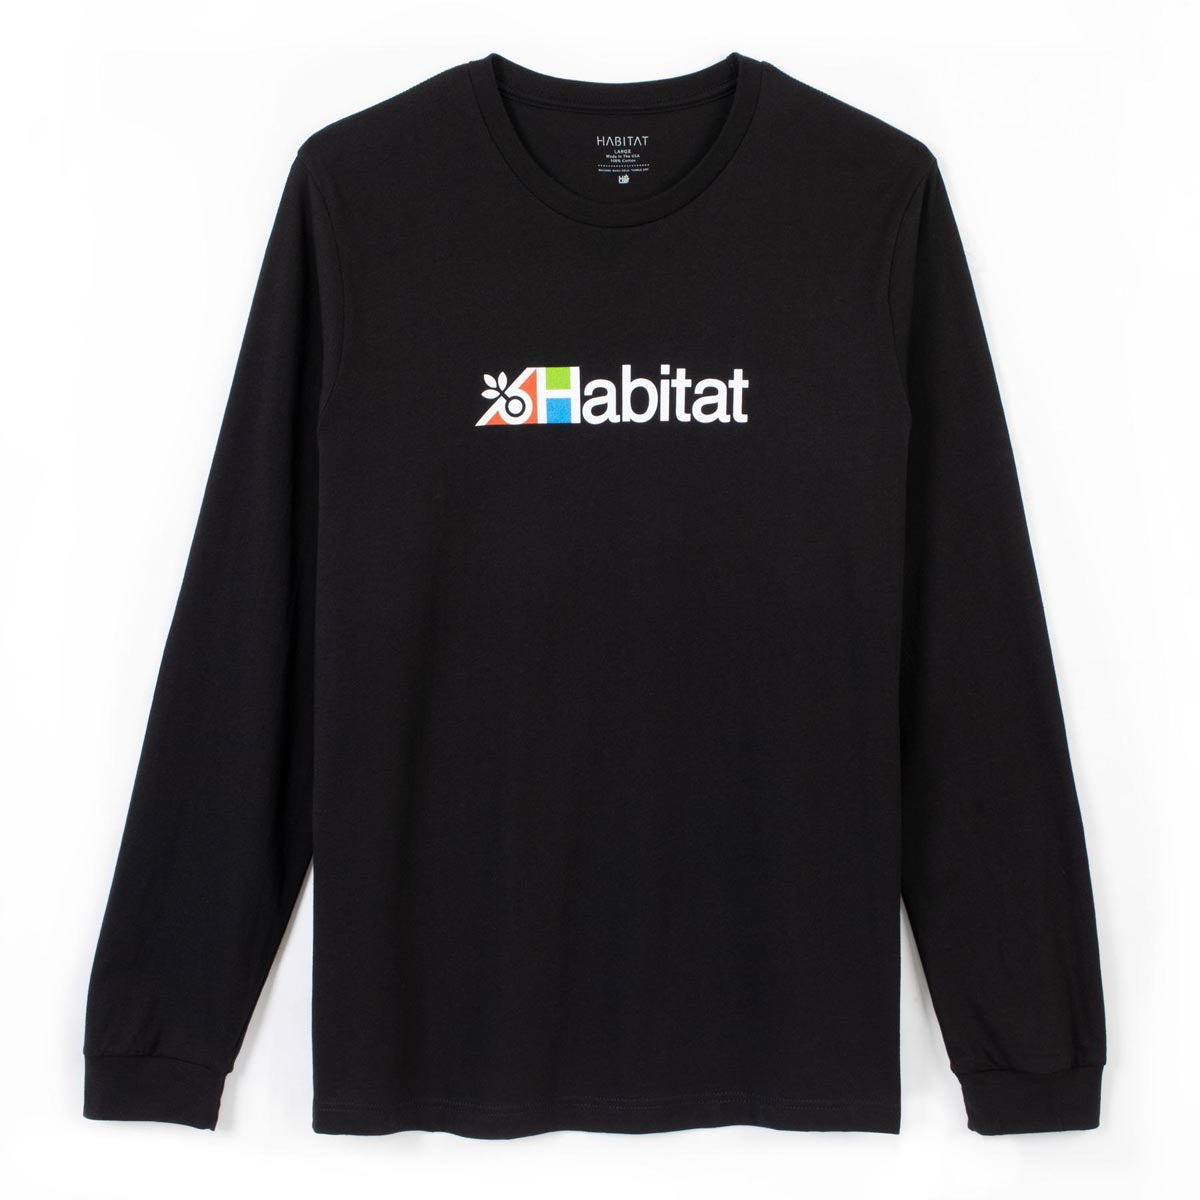 Habitat Transit Long Sleeve T-Shirt - Black image 1